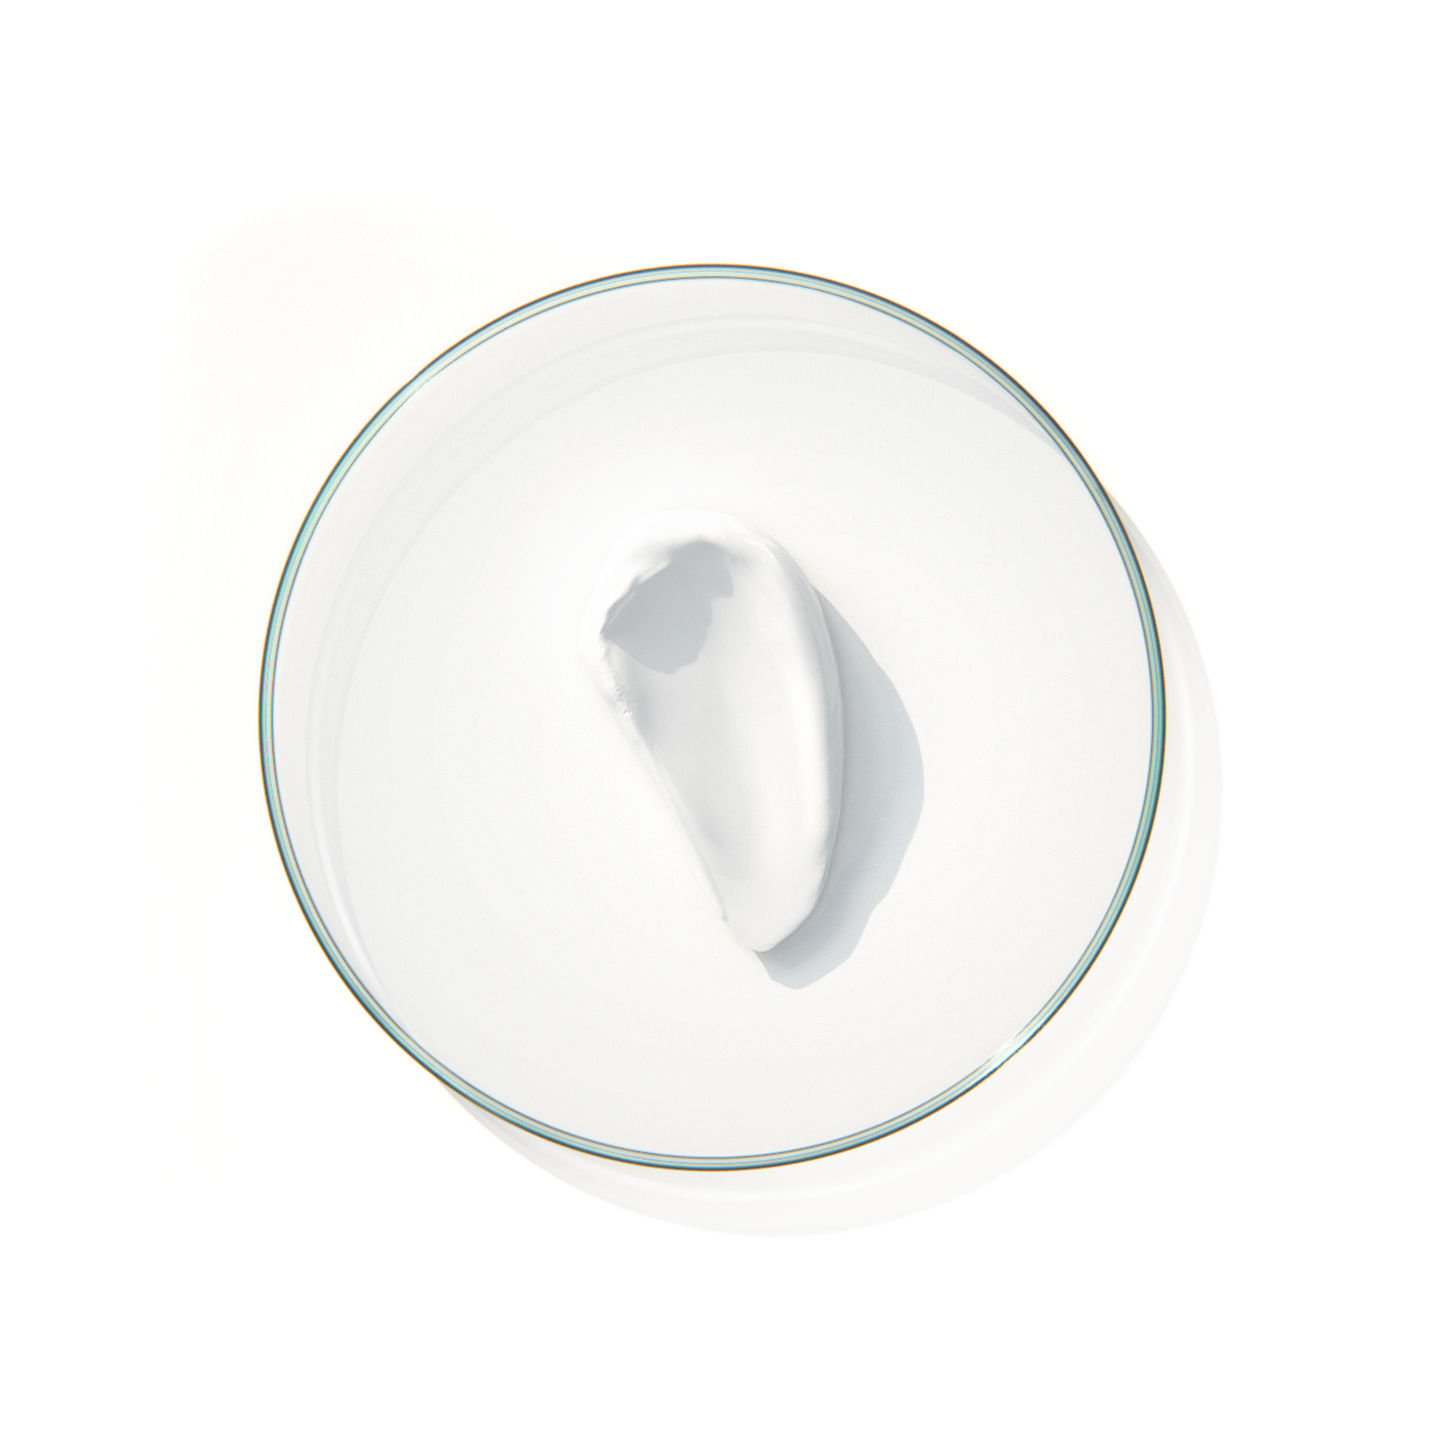 Hydra Cream - Hydra + Rejuvenating Cream - 3D product visualization for Stemlab - Sonny Nguyen